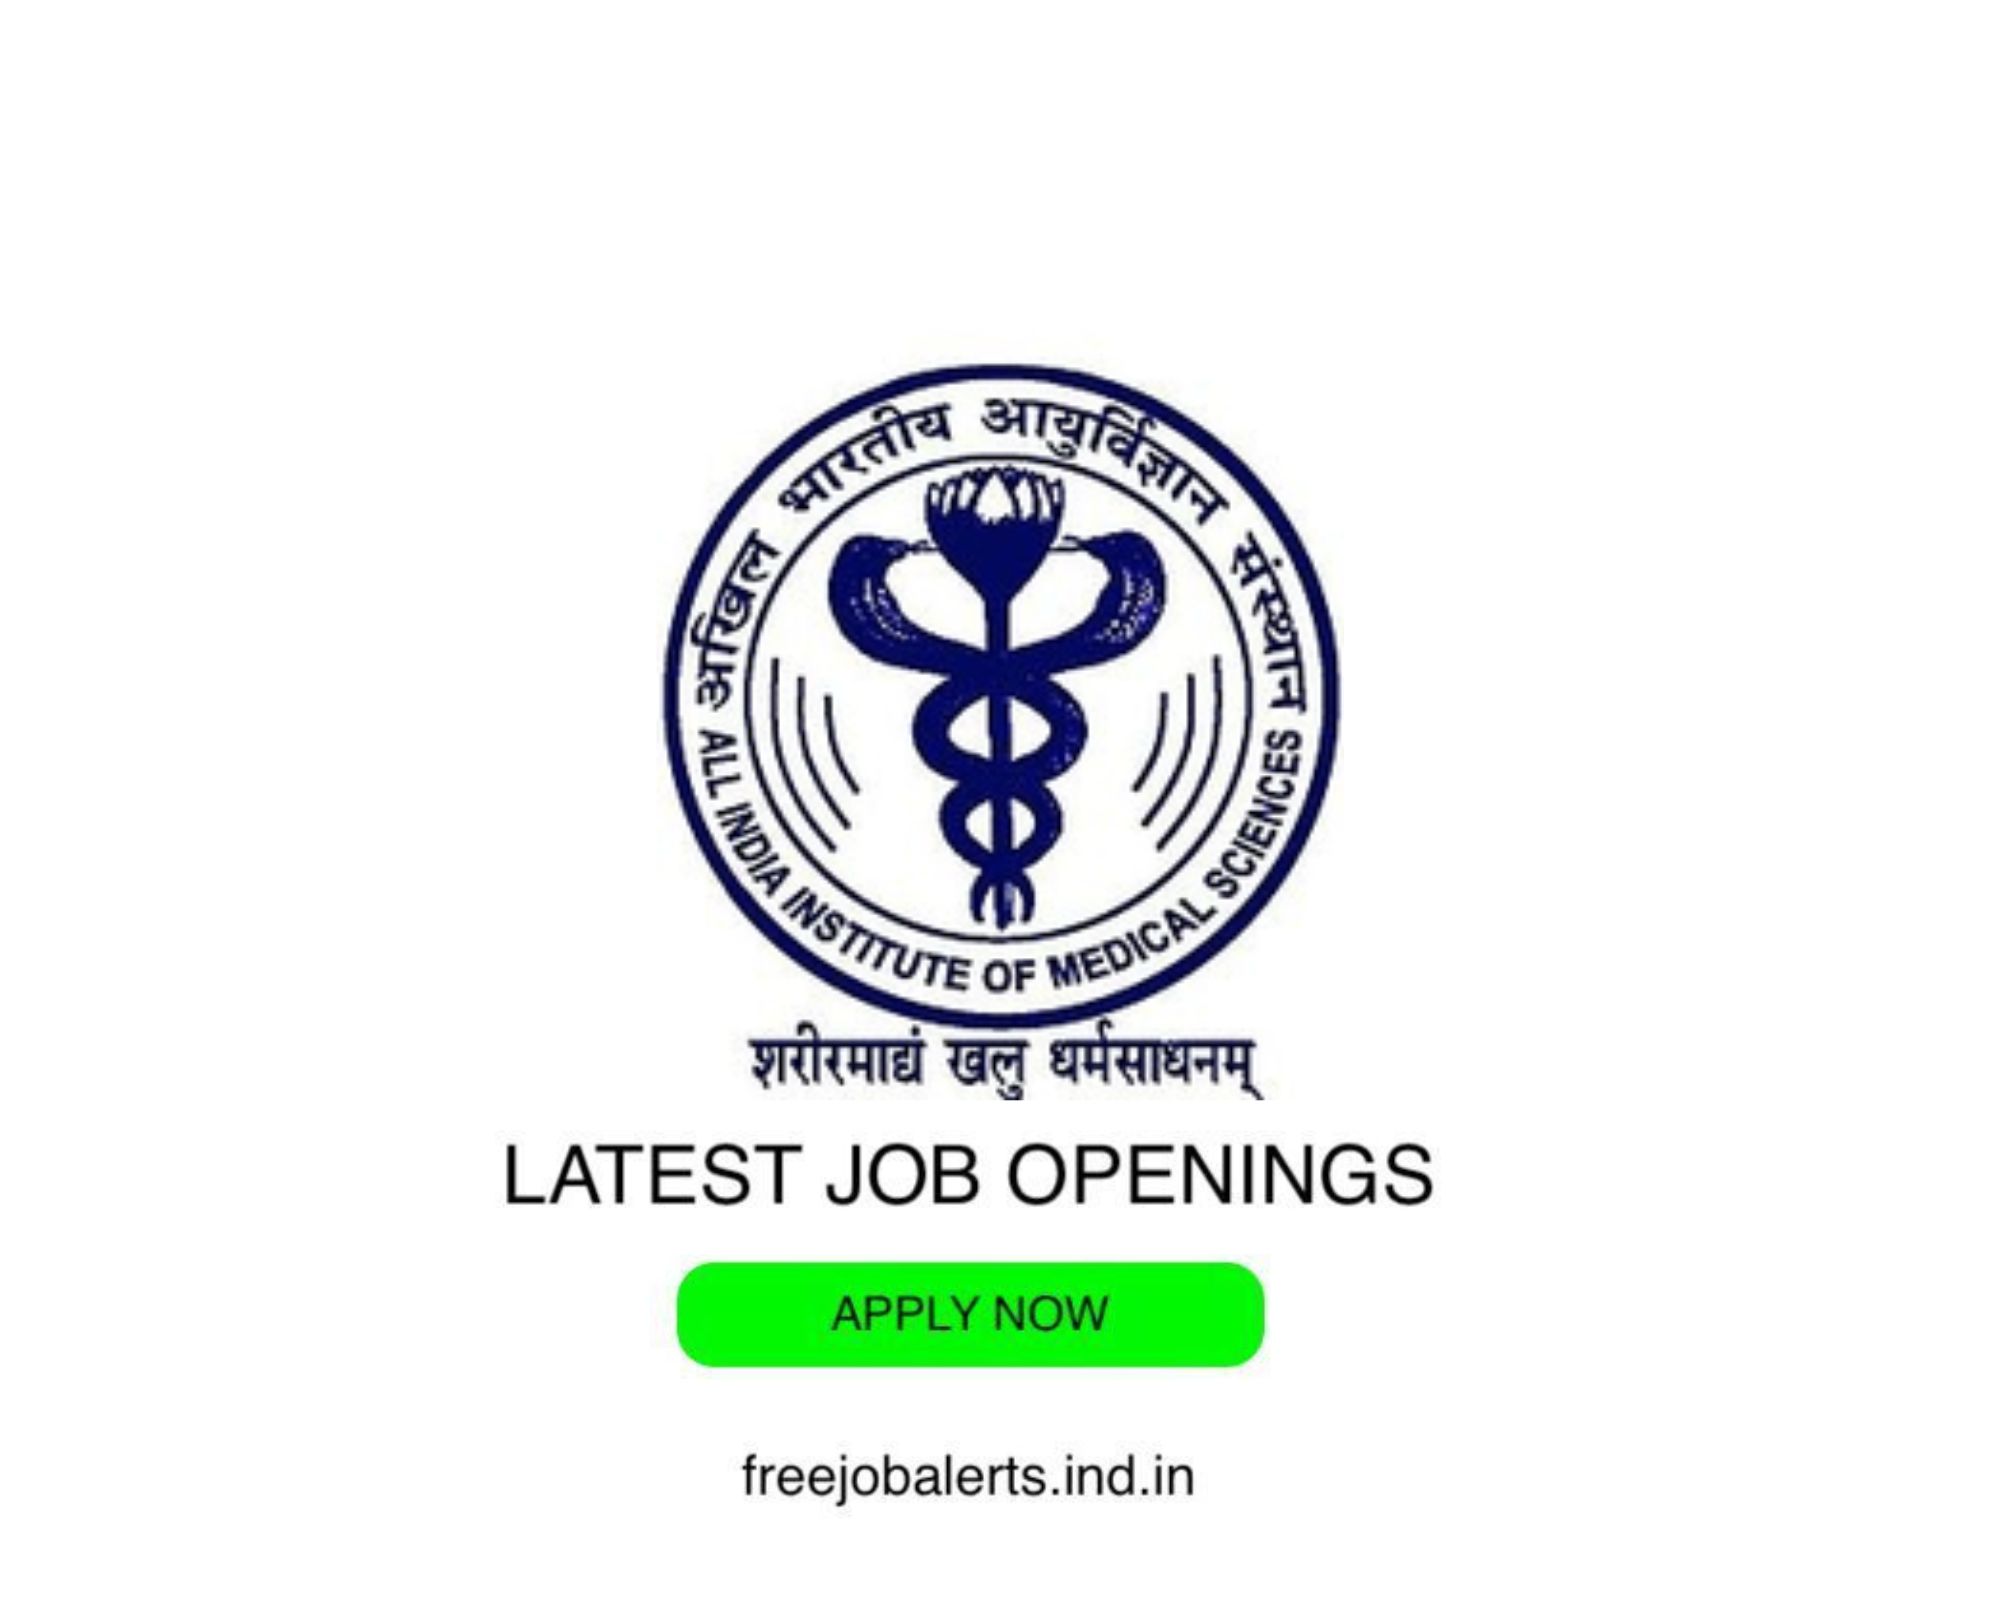 MAIDS - Maulana Azad Institute of Dental Sciences - Latest Govt job openings - Free job alerts, Indian Govt Jobs